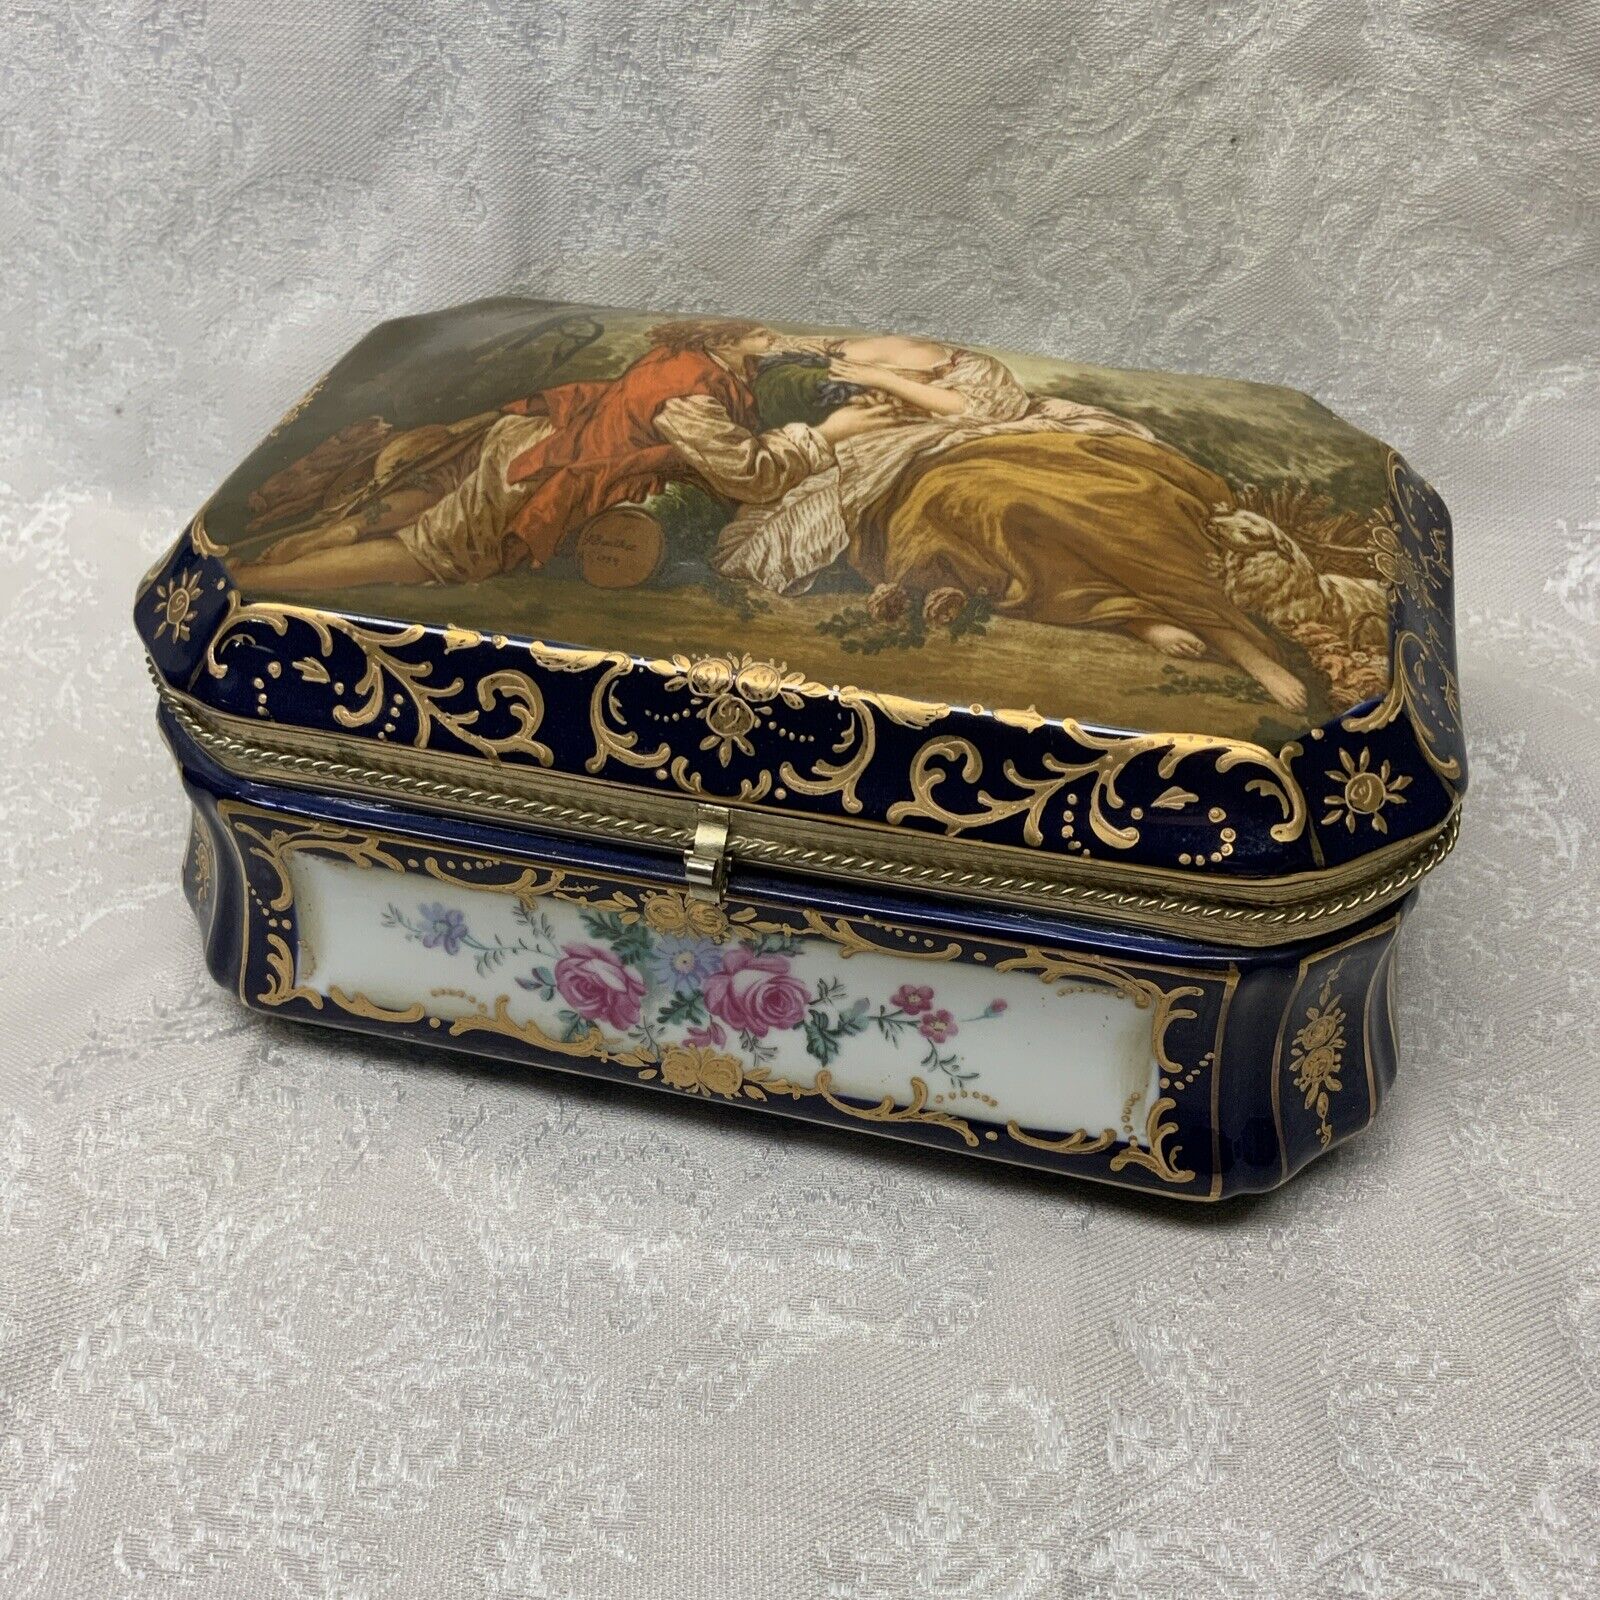 Antique artist-signed hand-painted porcelain box C:1759 F. Bouchée Jewelry Box